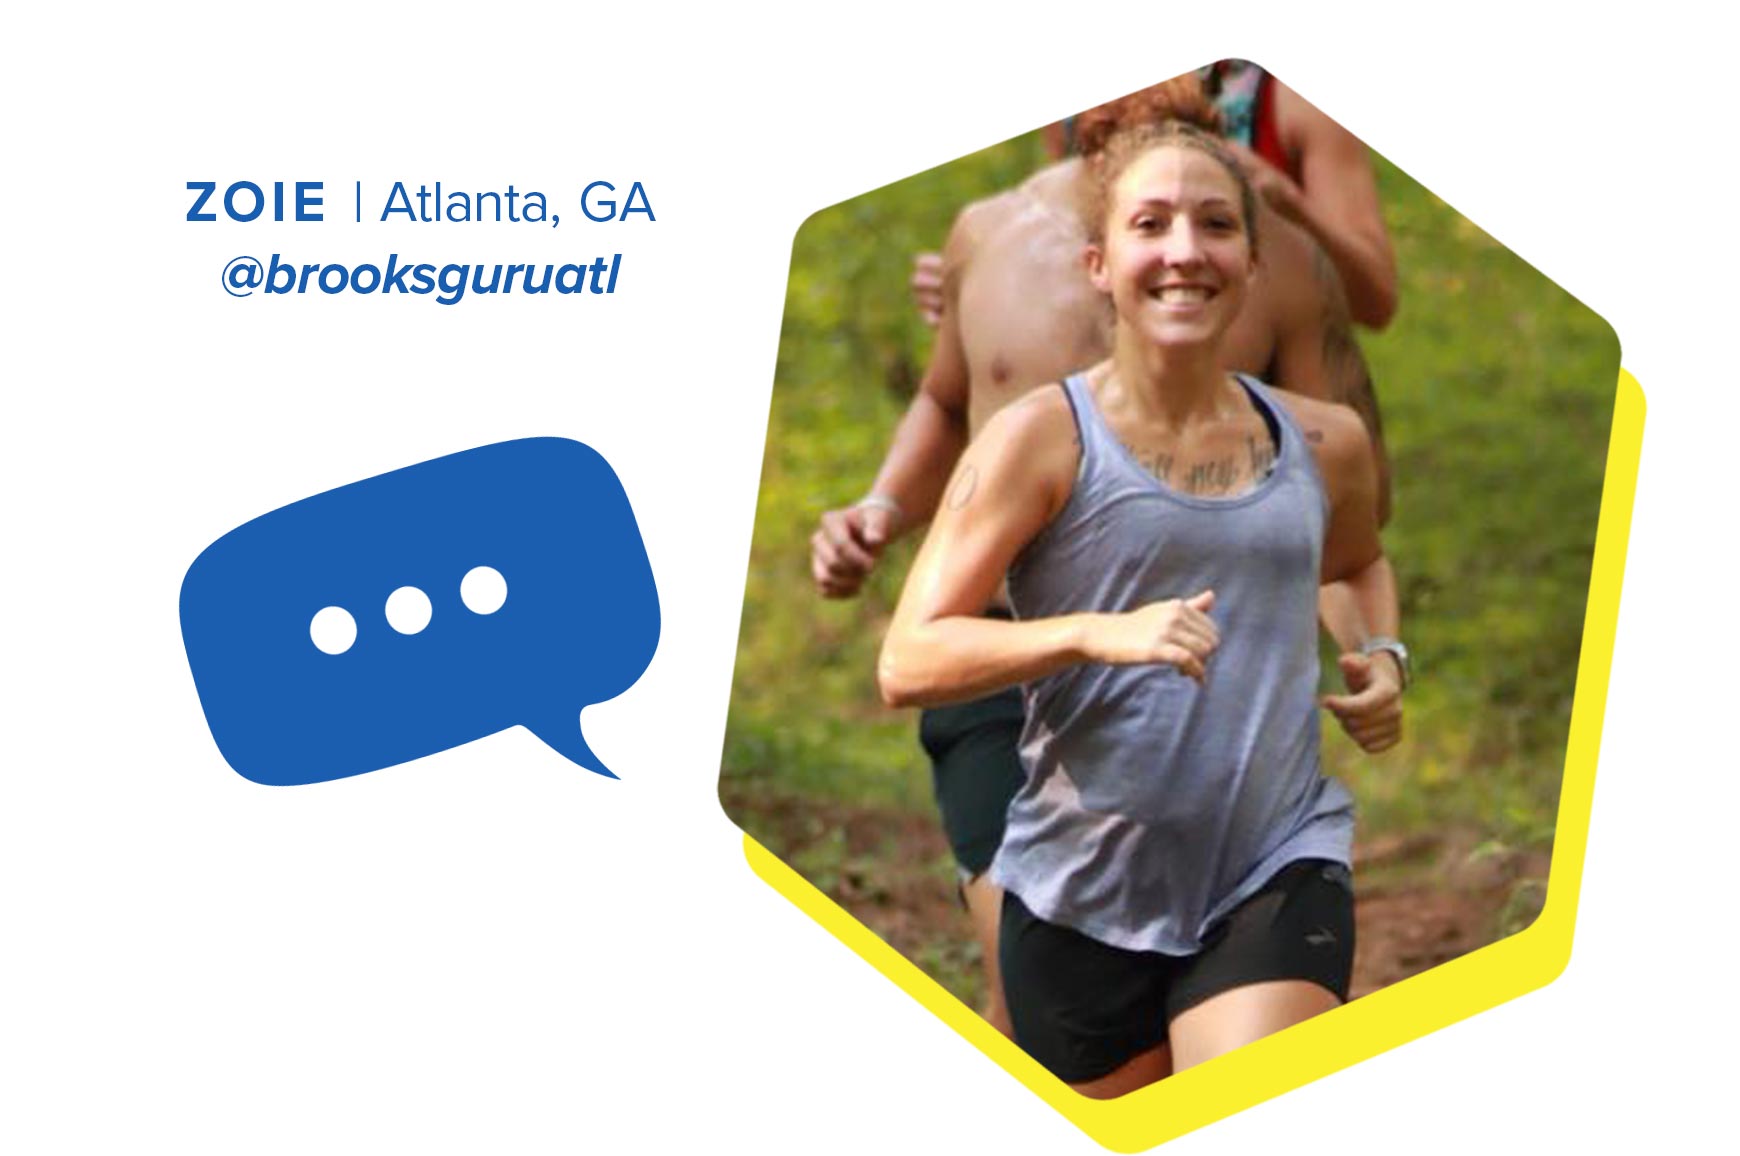 Zoie on a run and text that reads 'Zoie| Atlanta, GA | @brooksguruatl